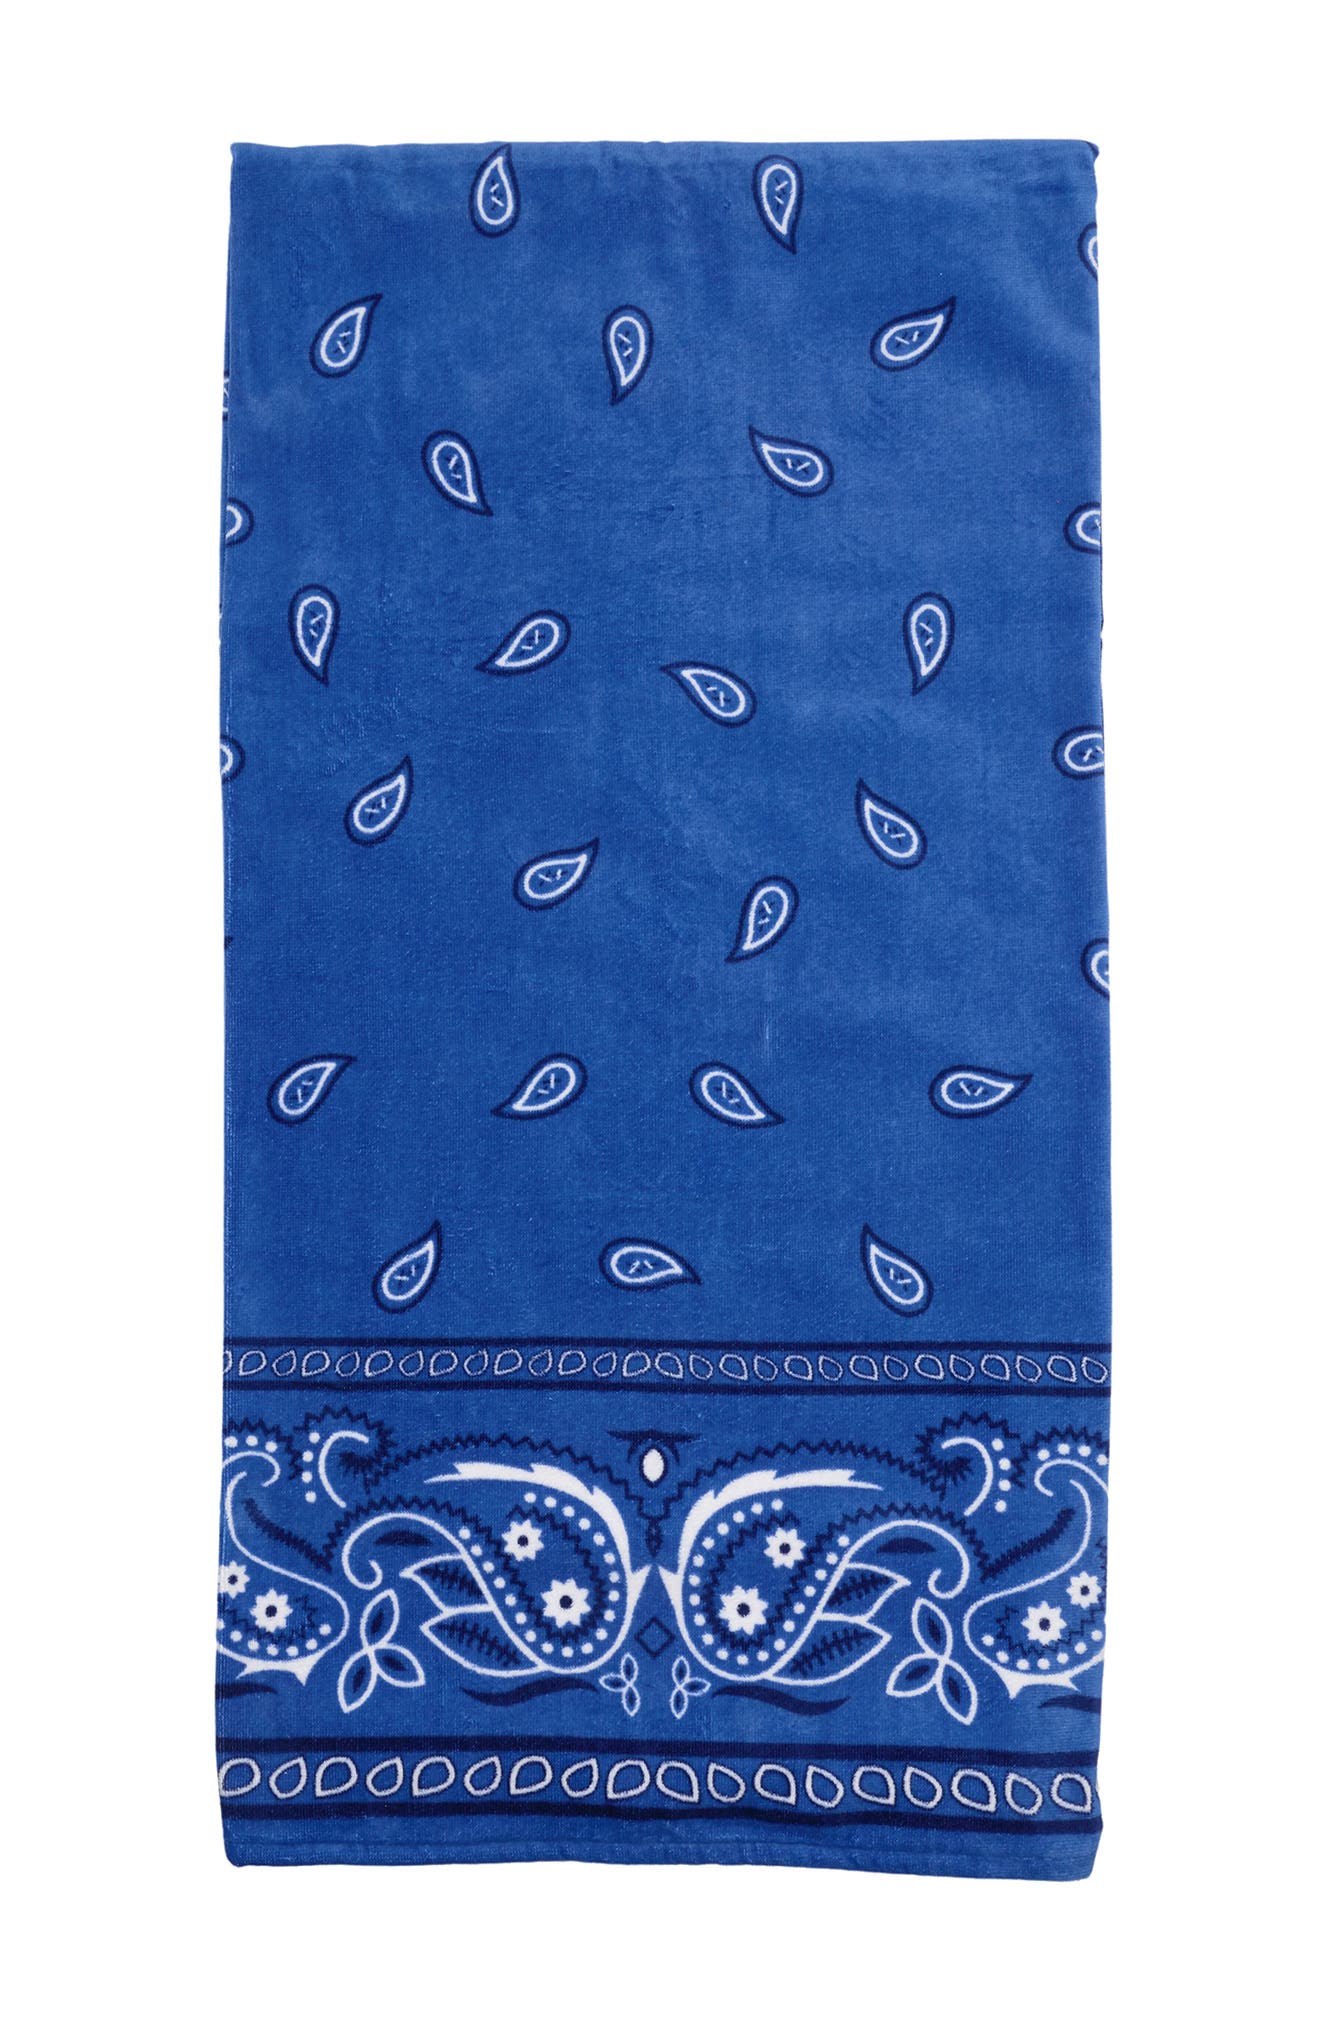 Apollo Towels Bandana Blue Beach Blanket